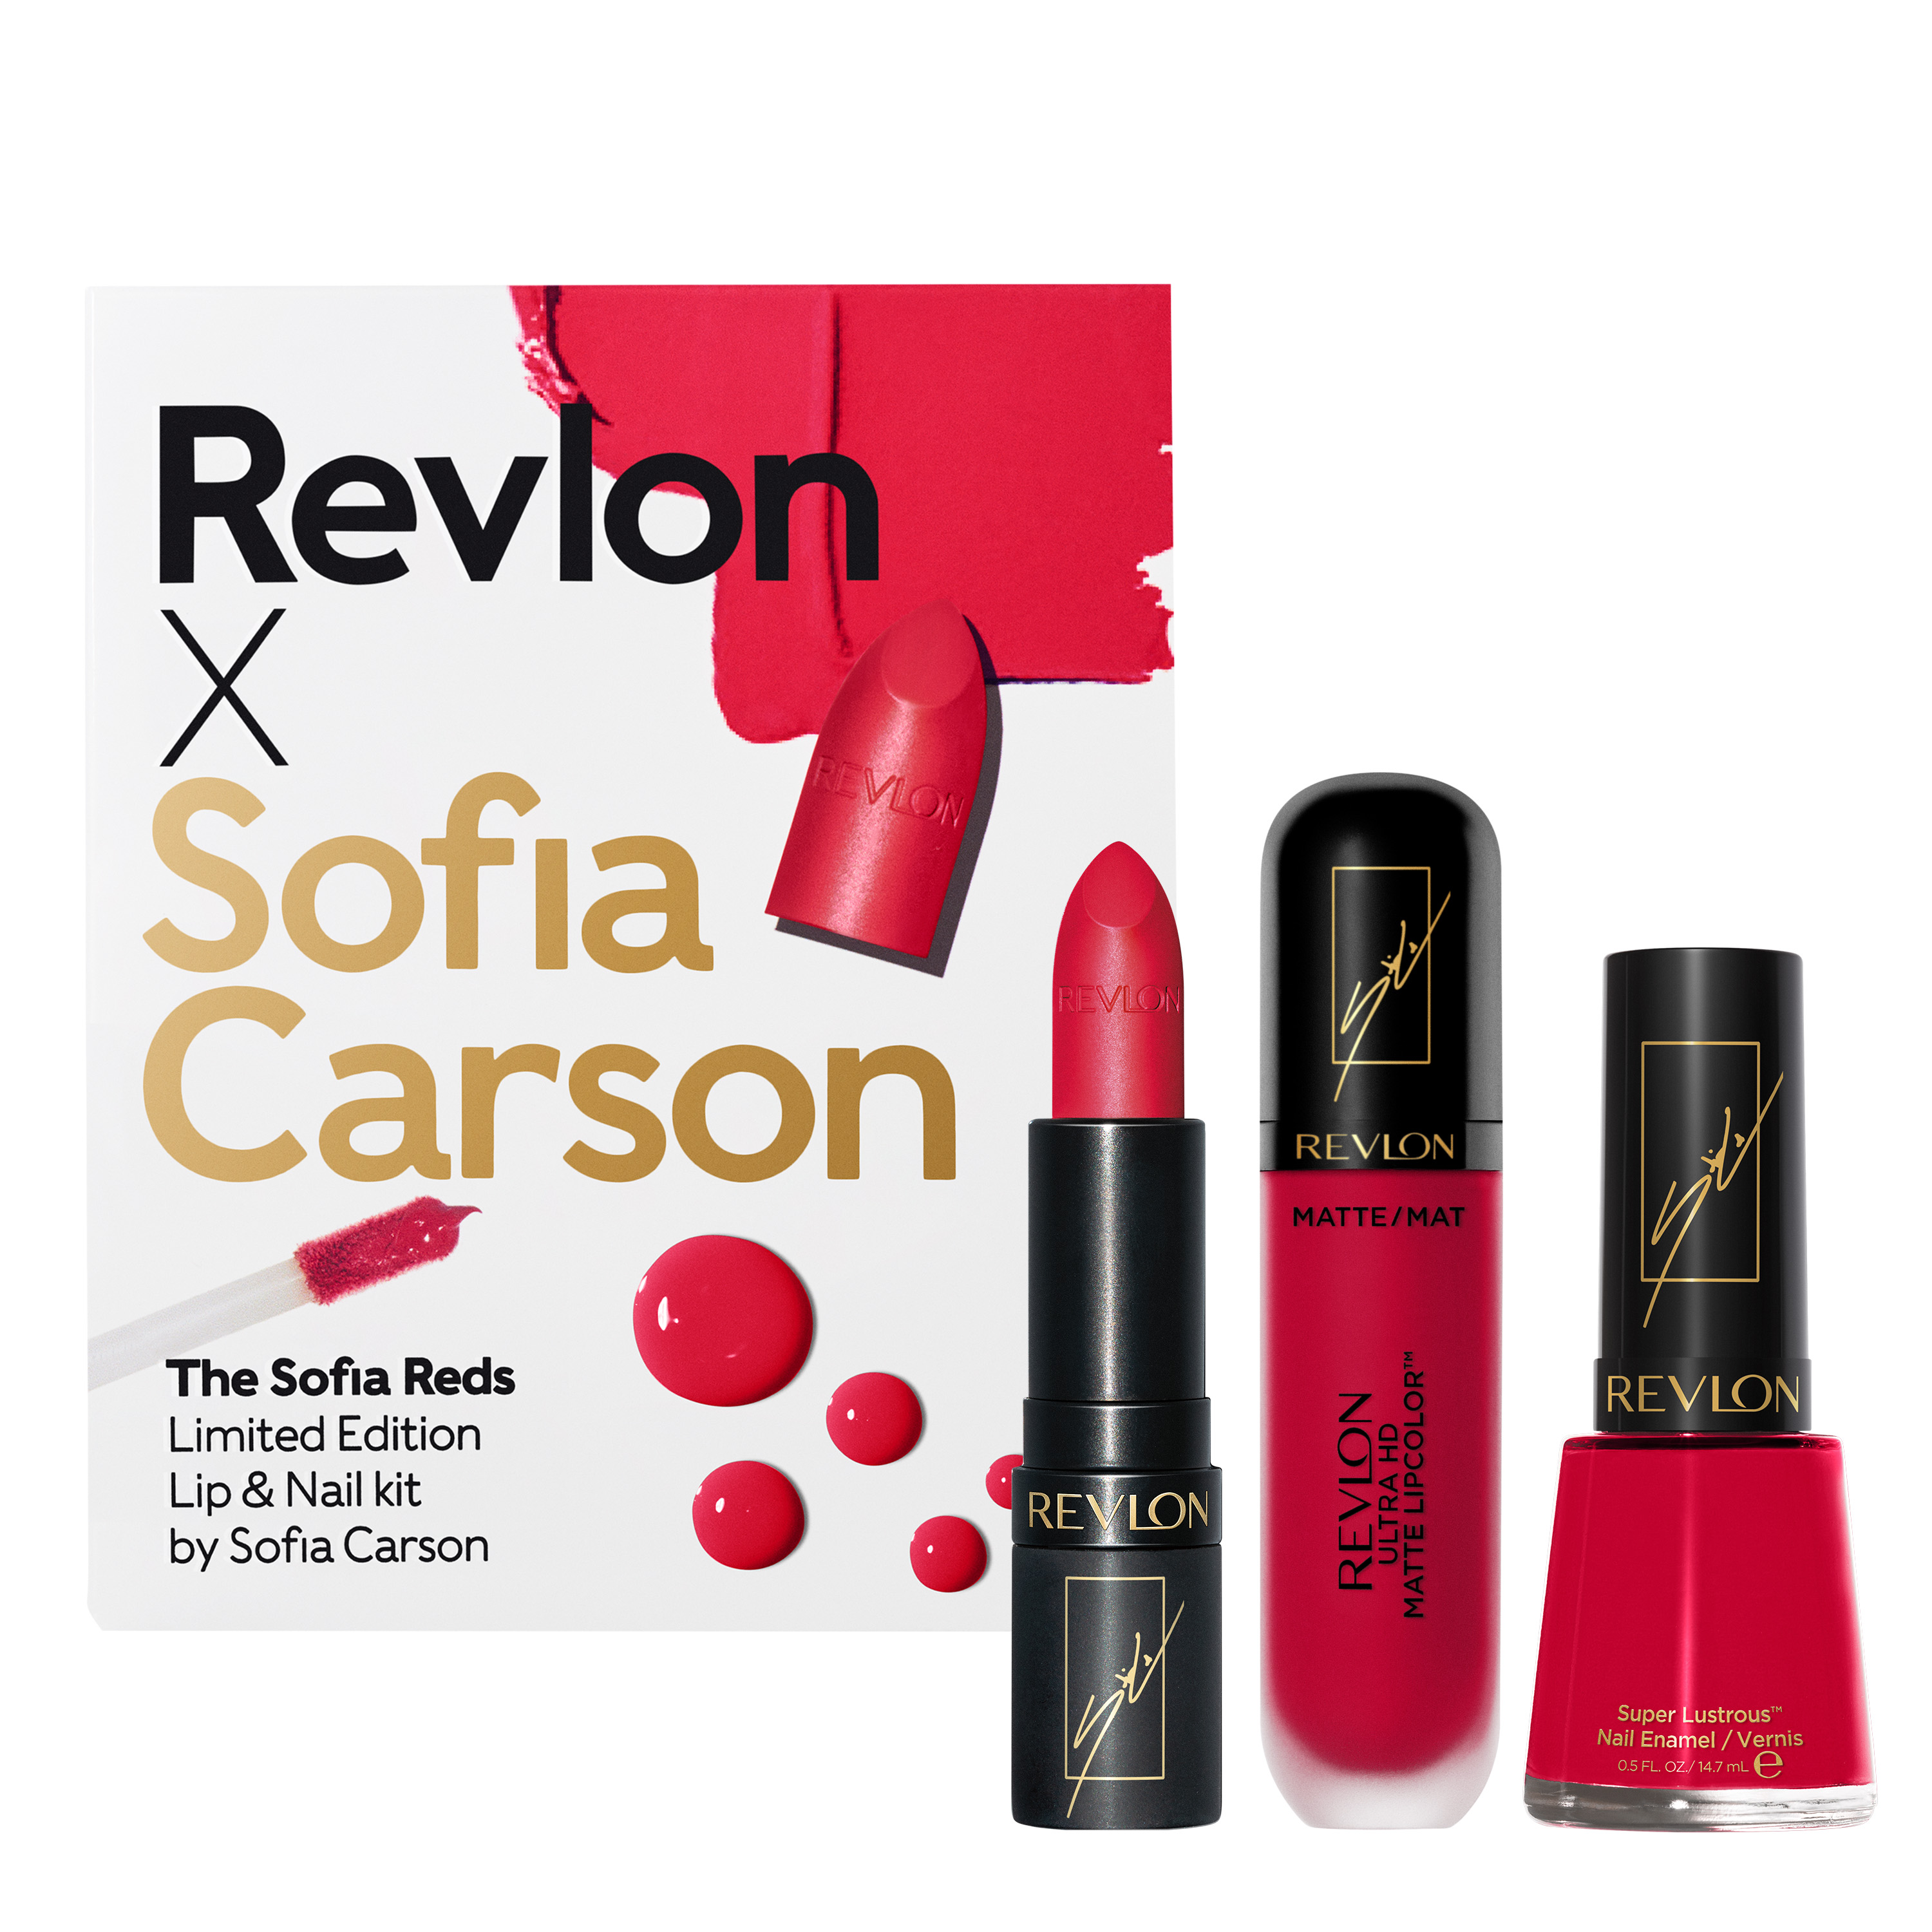 Revlon x Sofia Carson - The Sofia Reds Makeup Kit - Lipstick, Lipcolor, Nail Polish - image 1 of 14